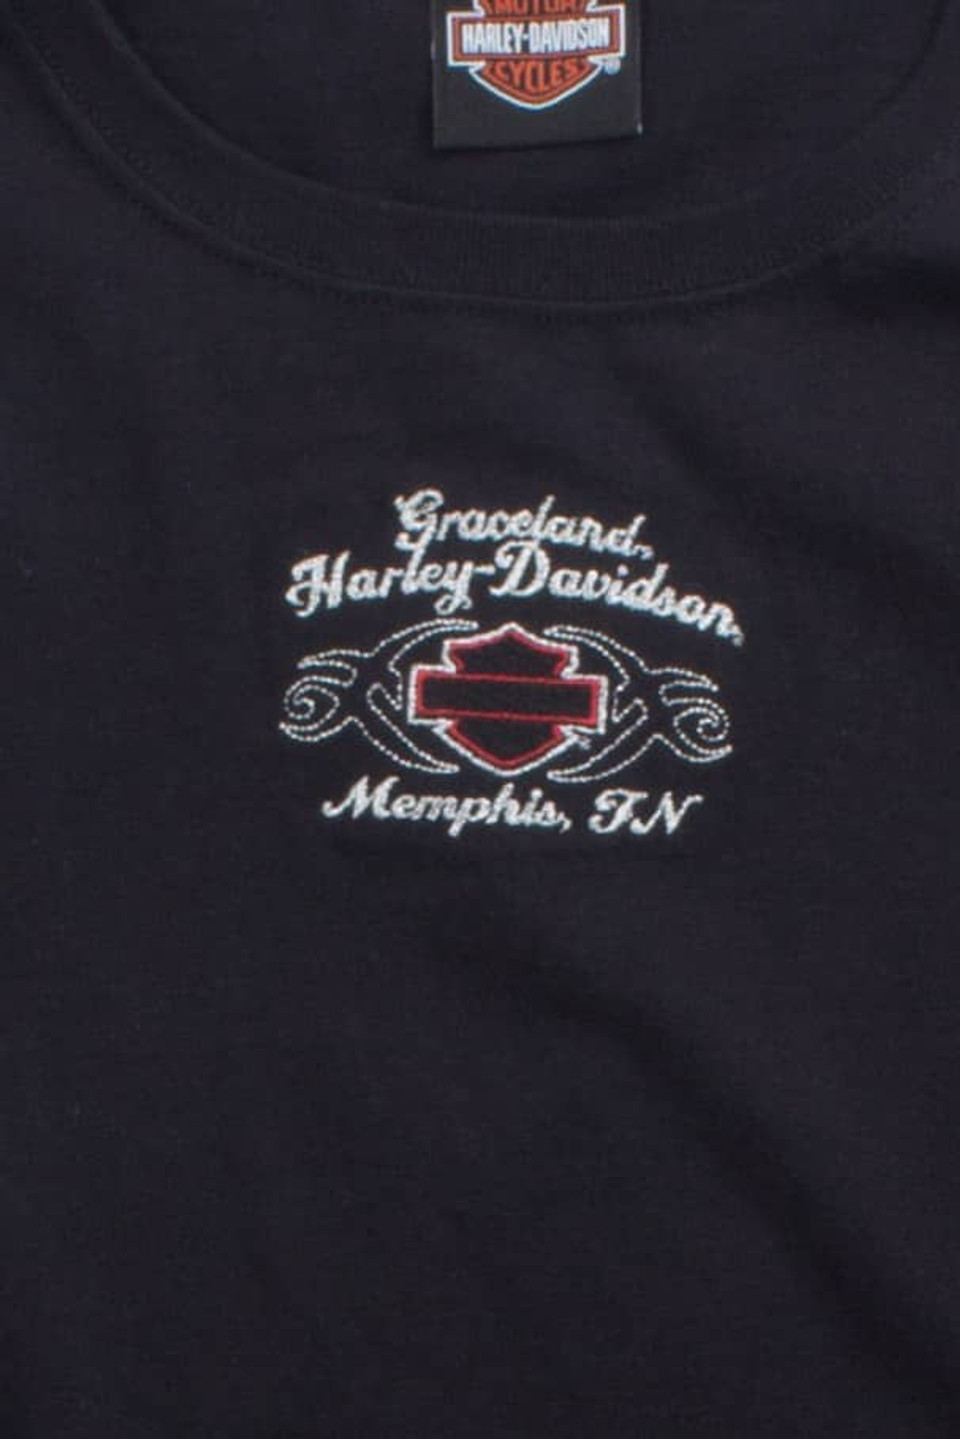 Open Road Harley Davidson Cut-Off T-Shirt - Ragstock.com